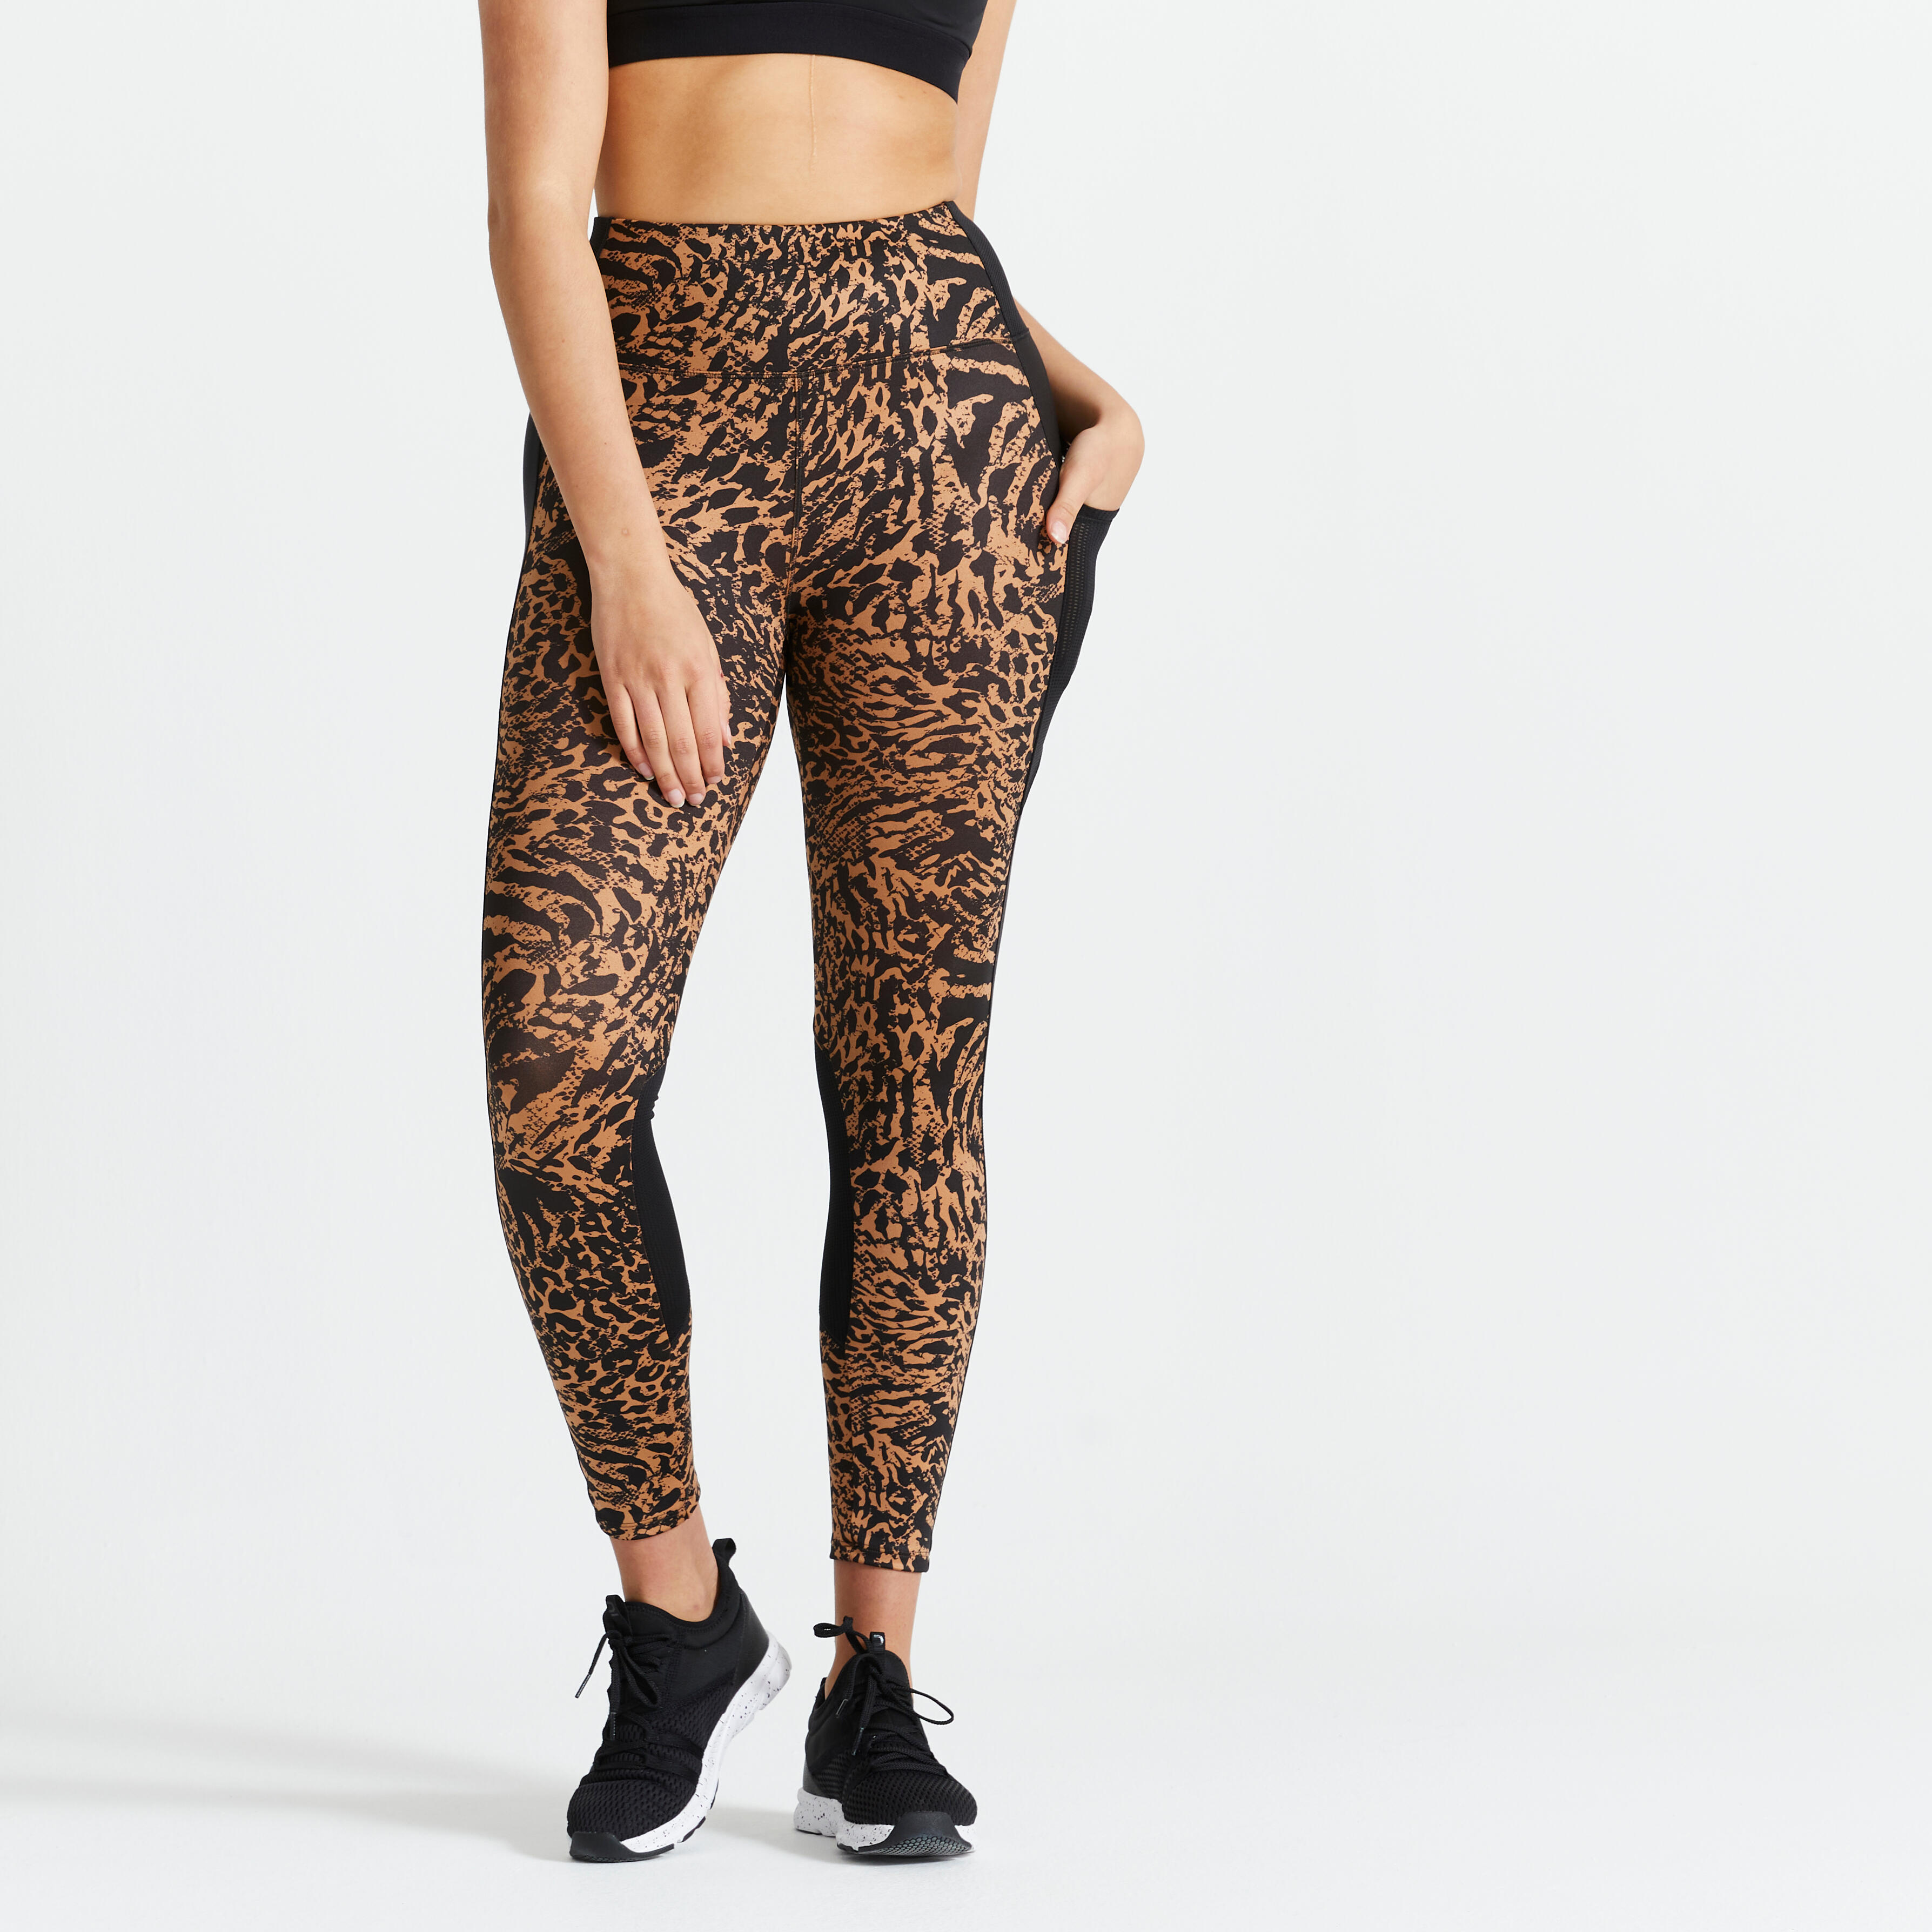 Buy aliveGOT Leopard Print Yoga Pants High Waist Workout Leggings Capris  For Women at Amazon.in